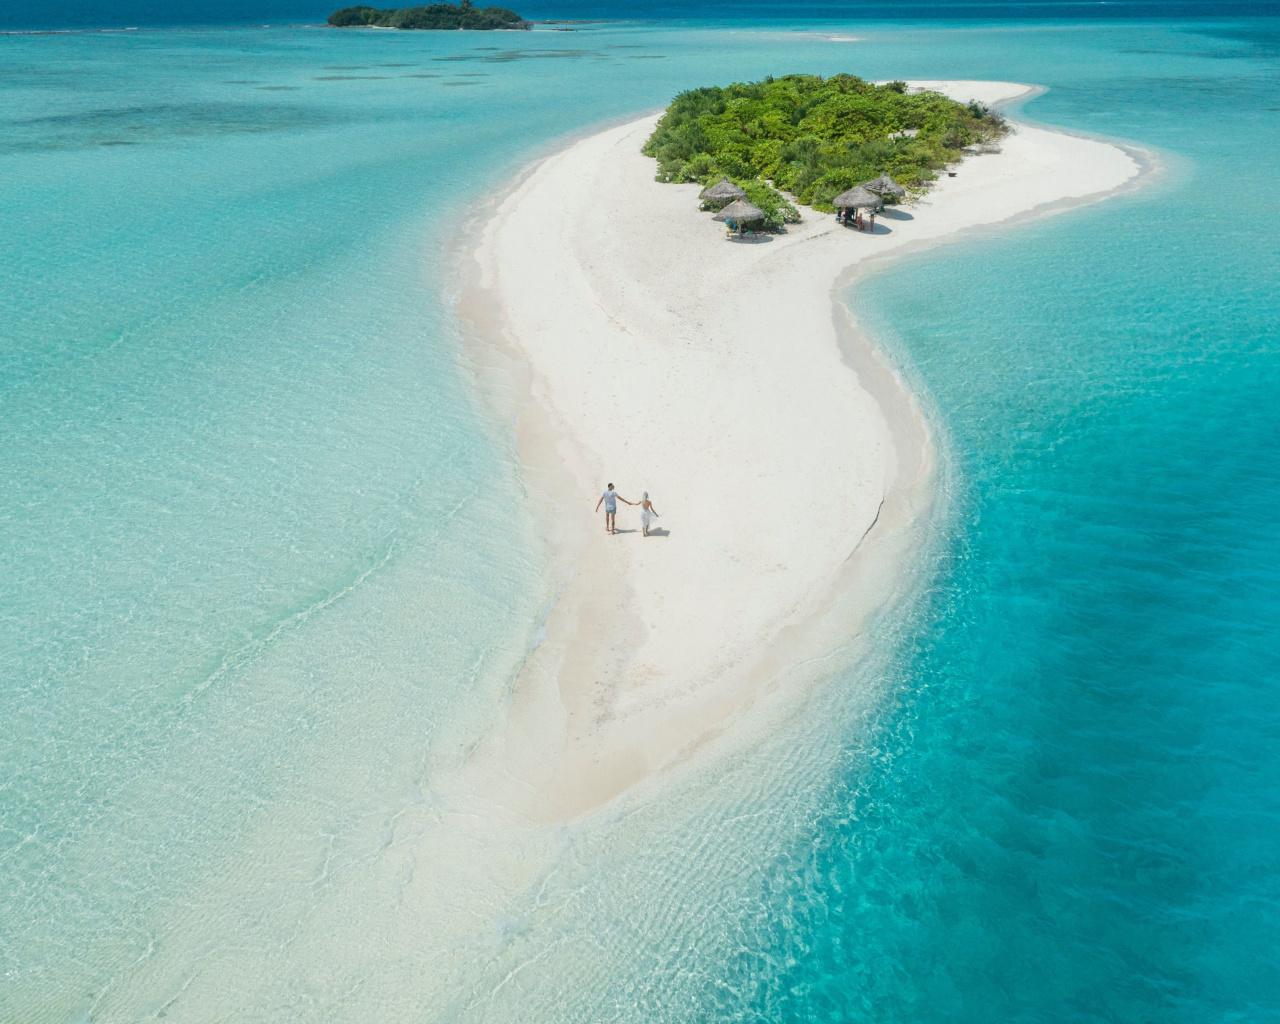 Download 1280x1024 wallpaper beach, aerial view, tropical island